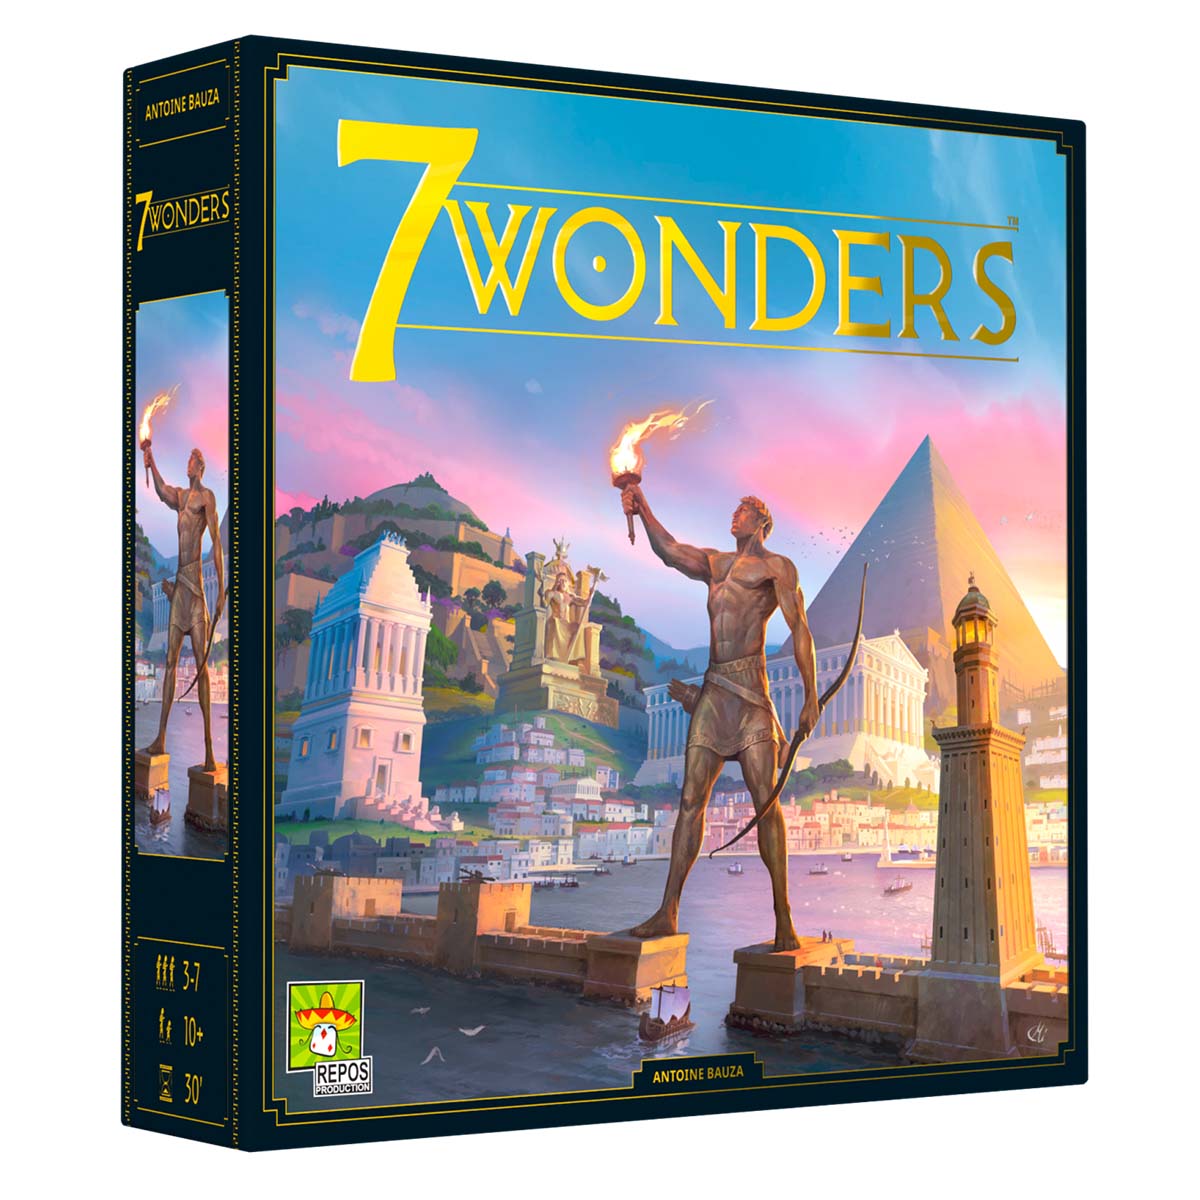 7 Wonders board game box